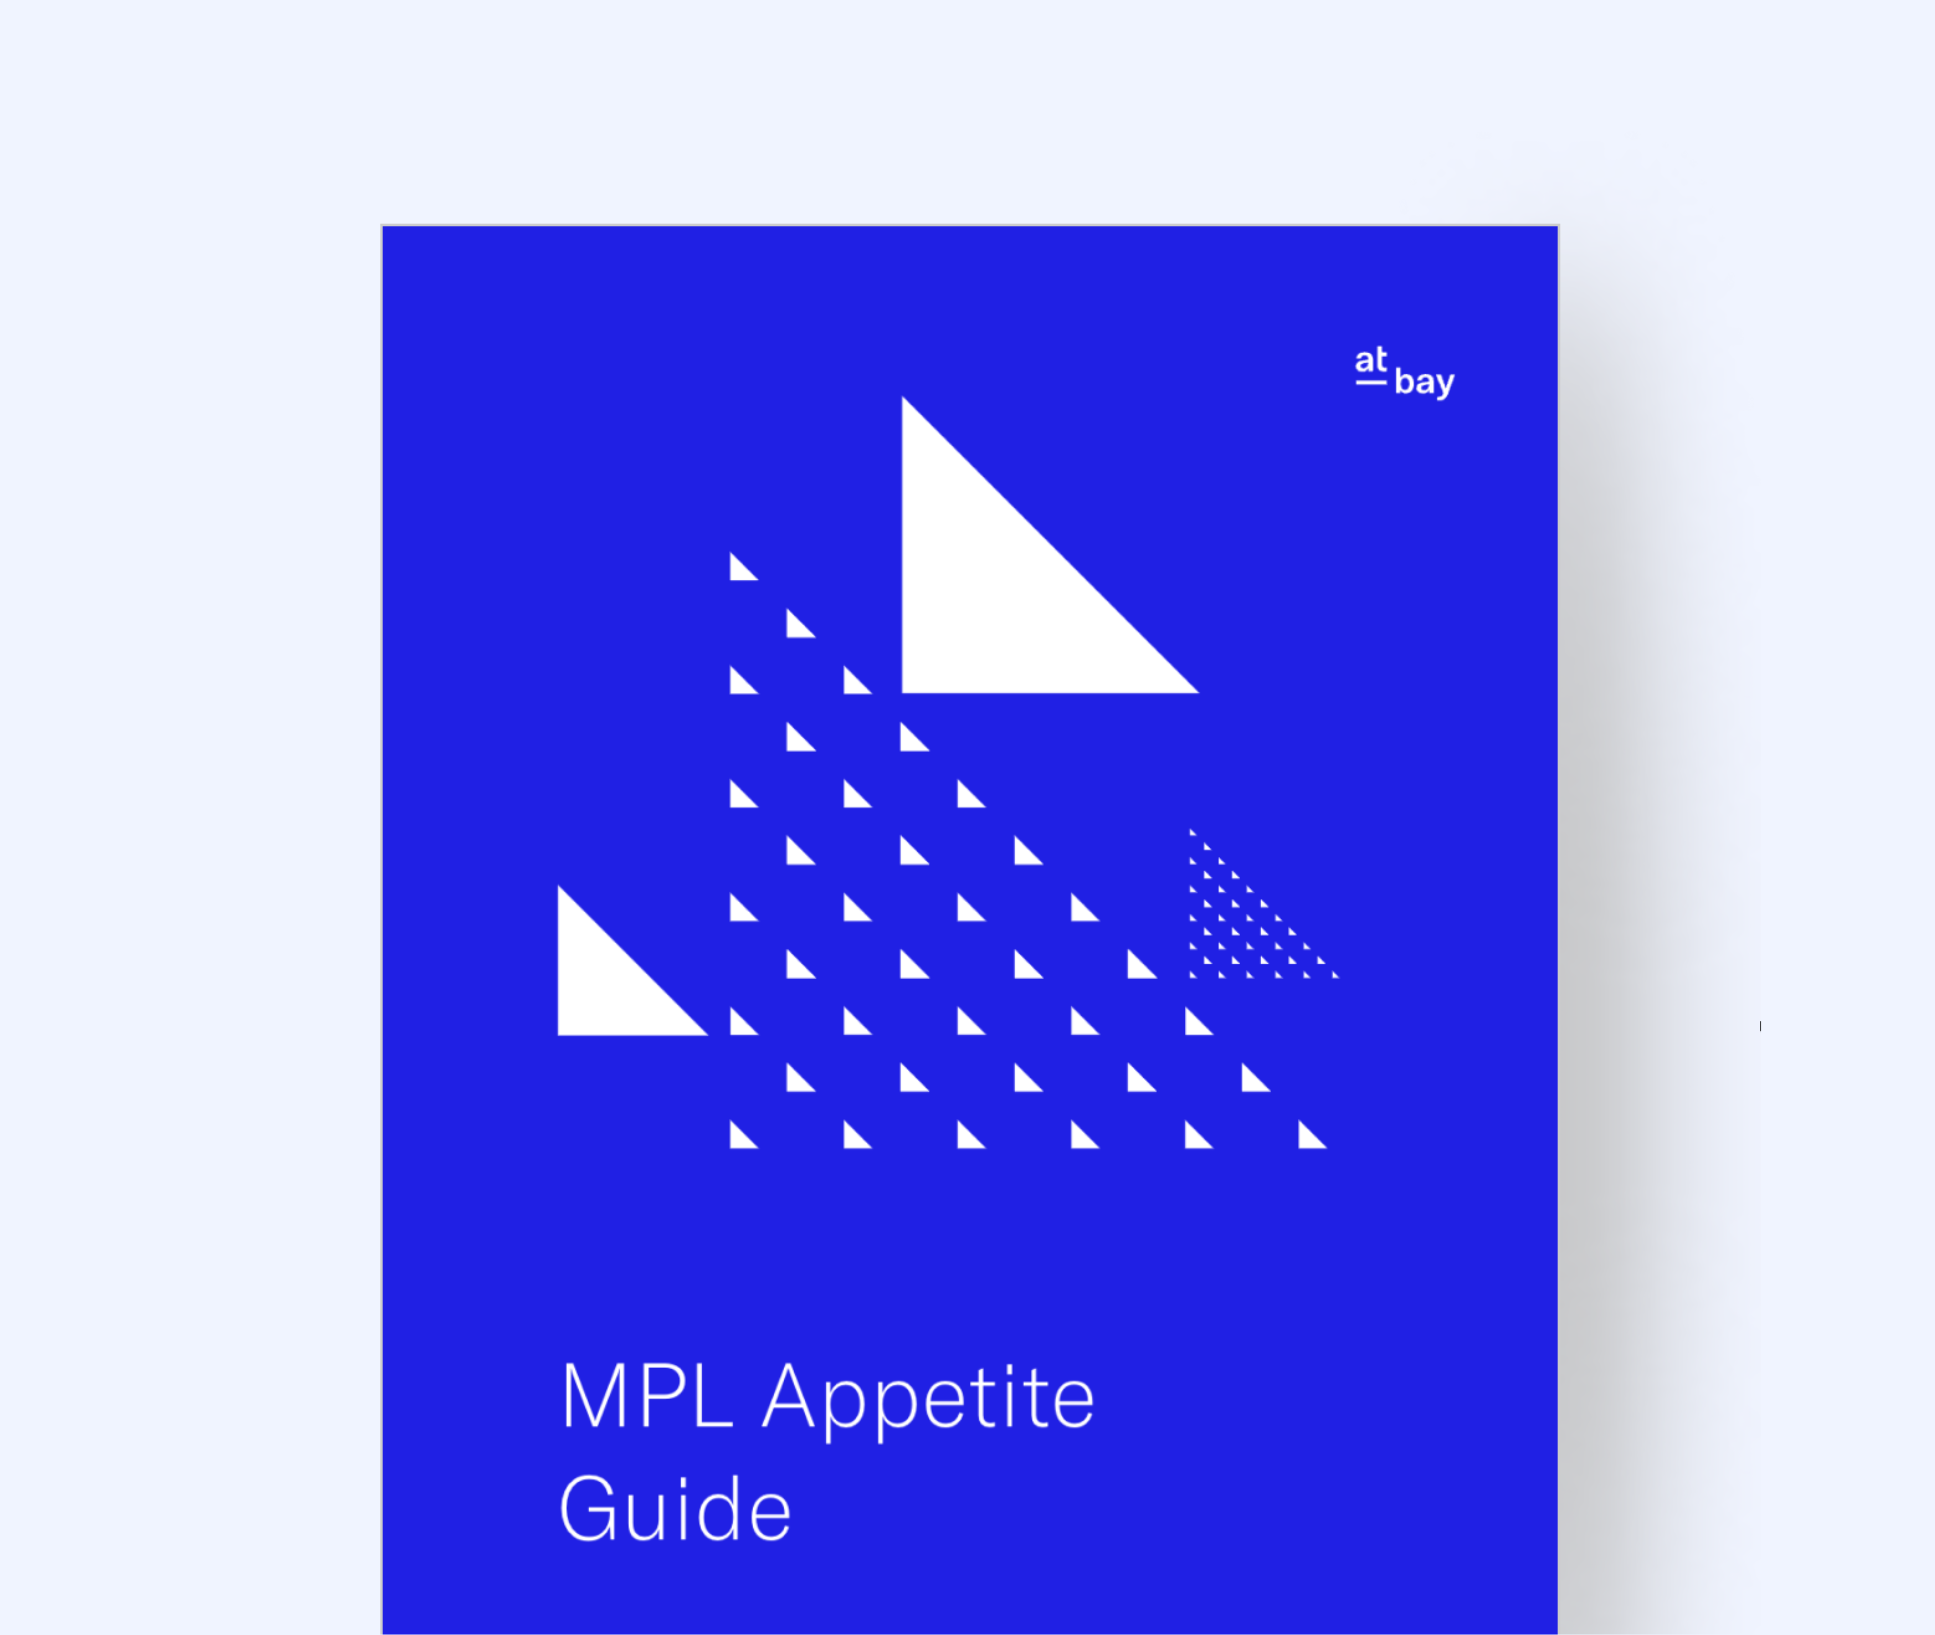 MPL Appetite Guide